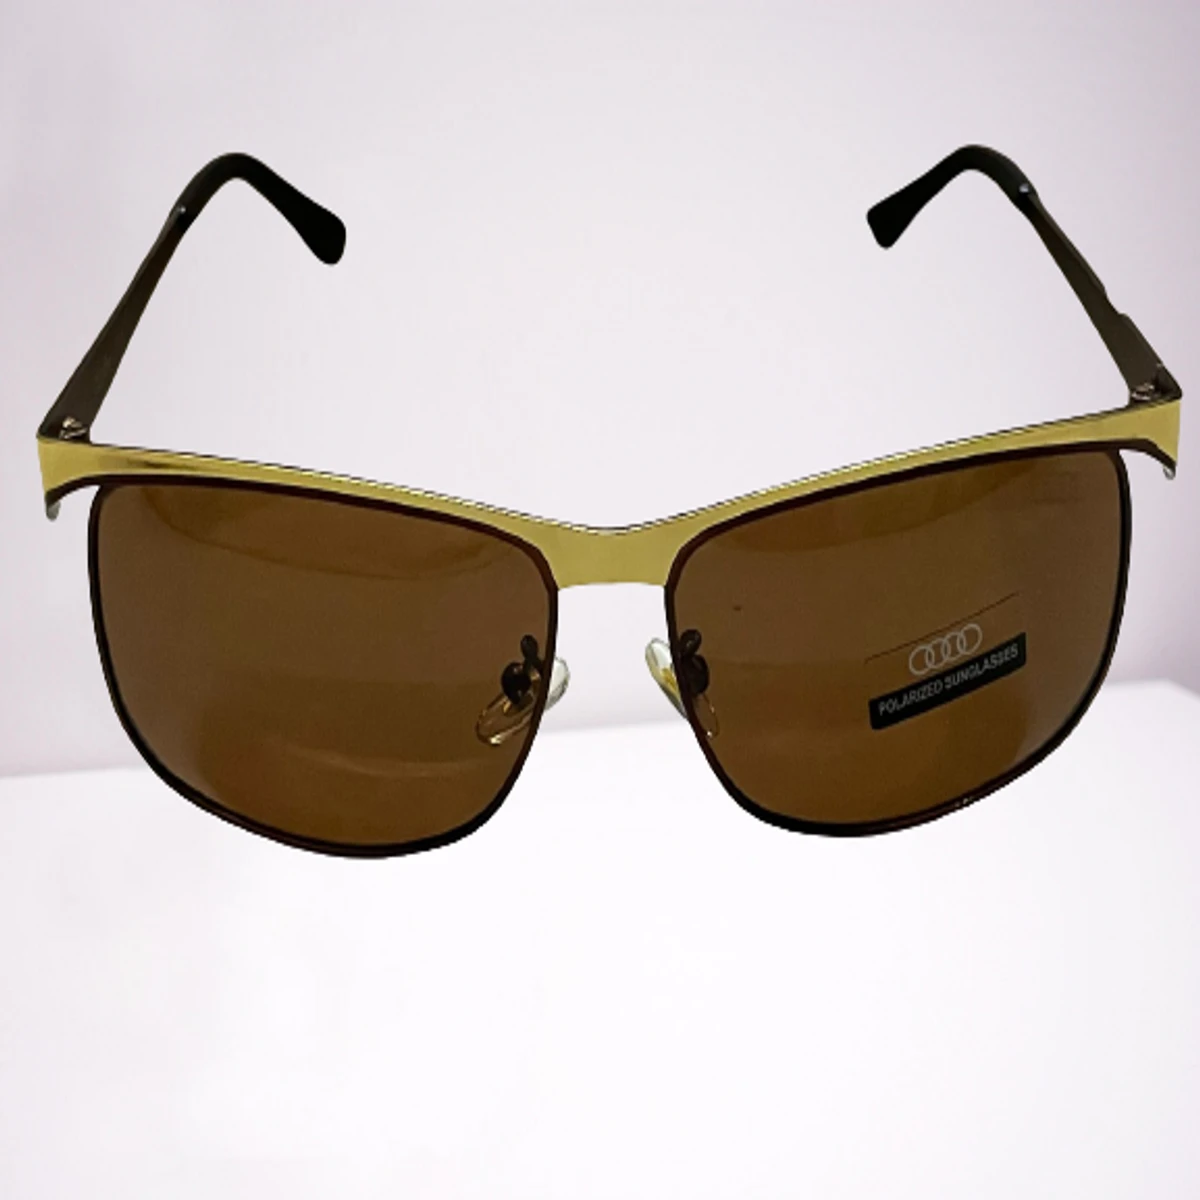 Audi Polarized Sunglasses golden brown